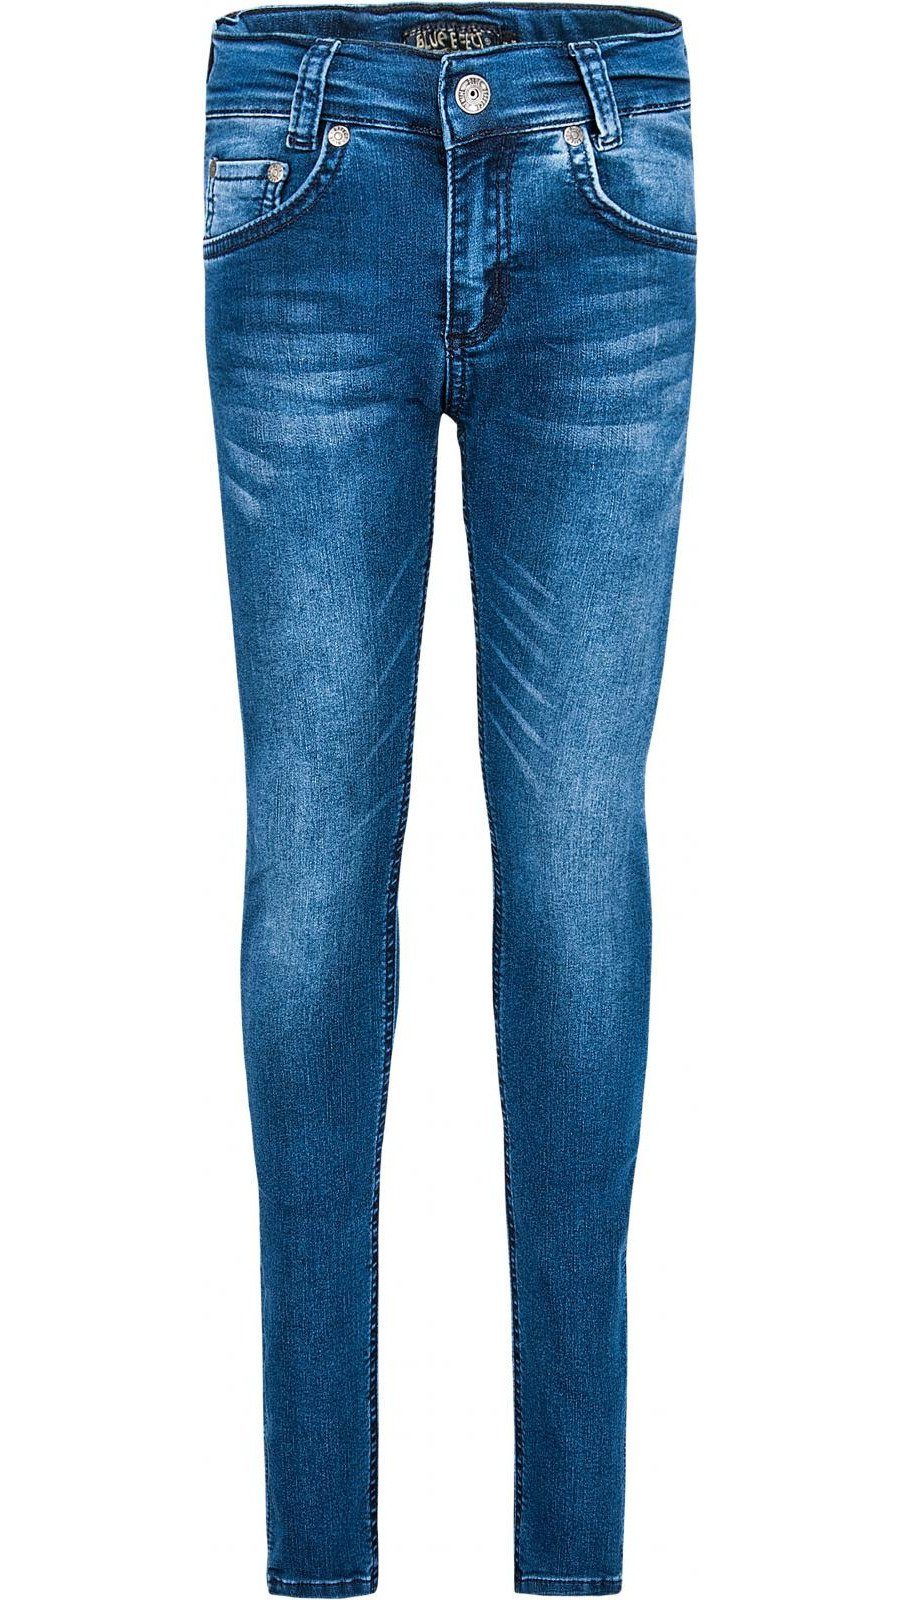 Skinny Jeans EFFECT slim fit medium Hose blue ultrastretch Slim-fit-Jeans BLUE